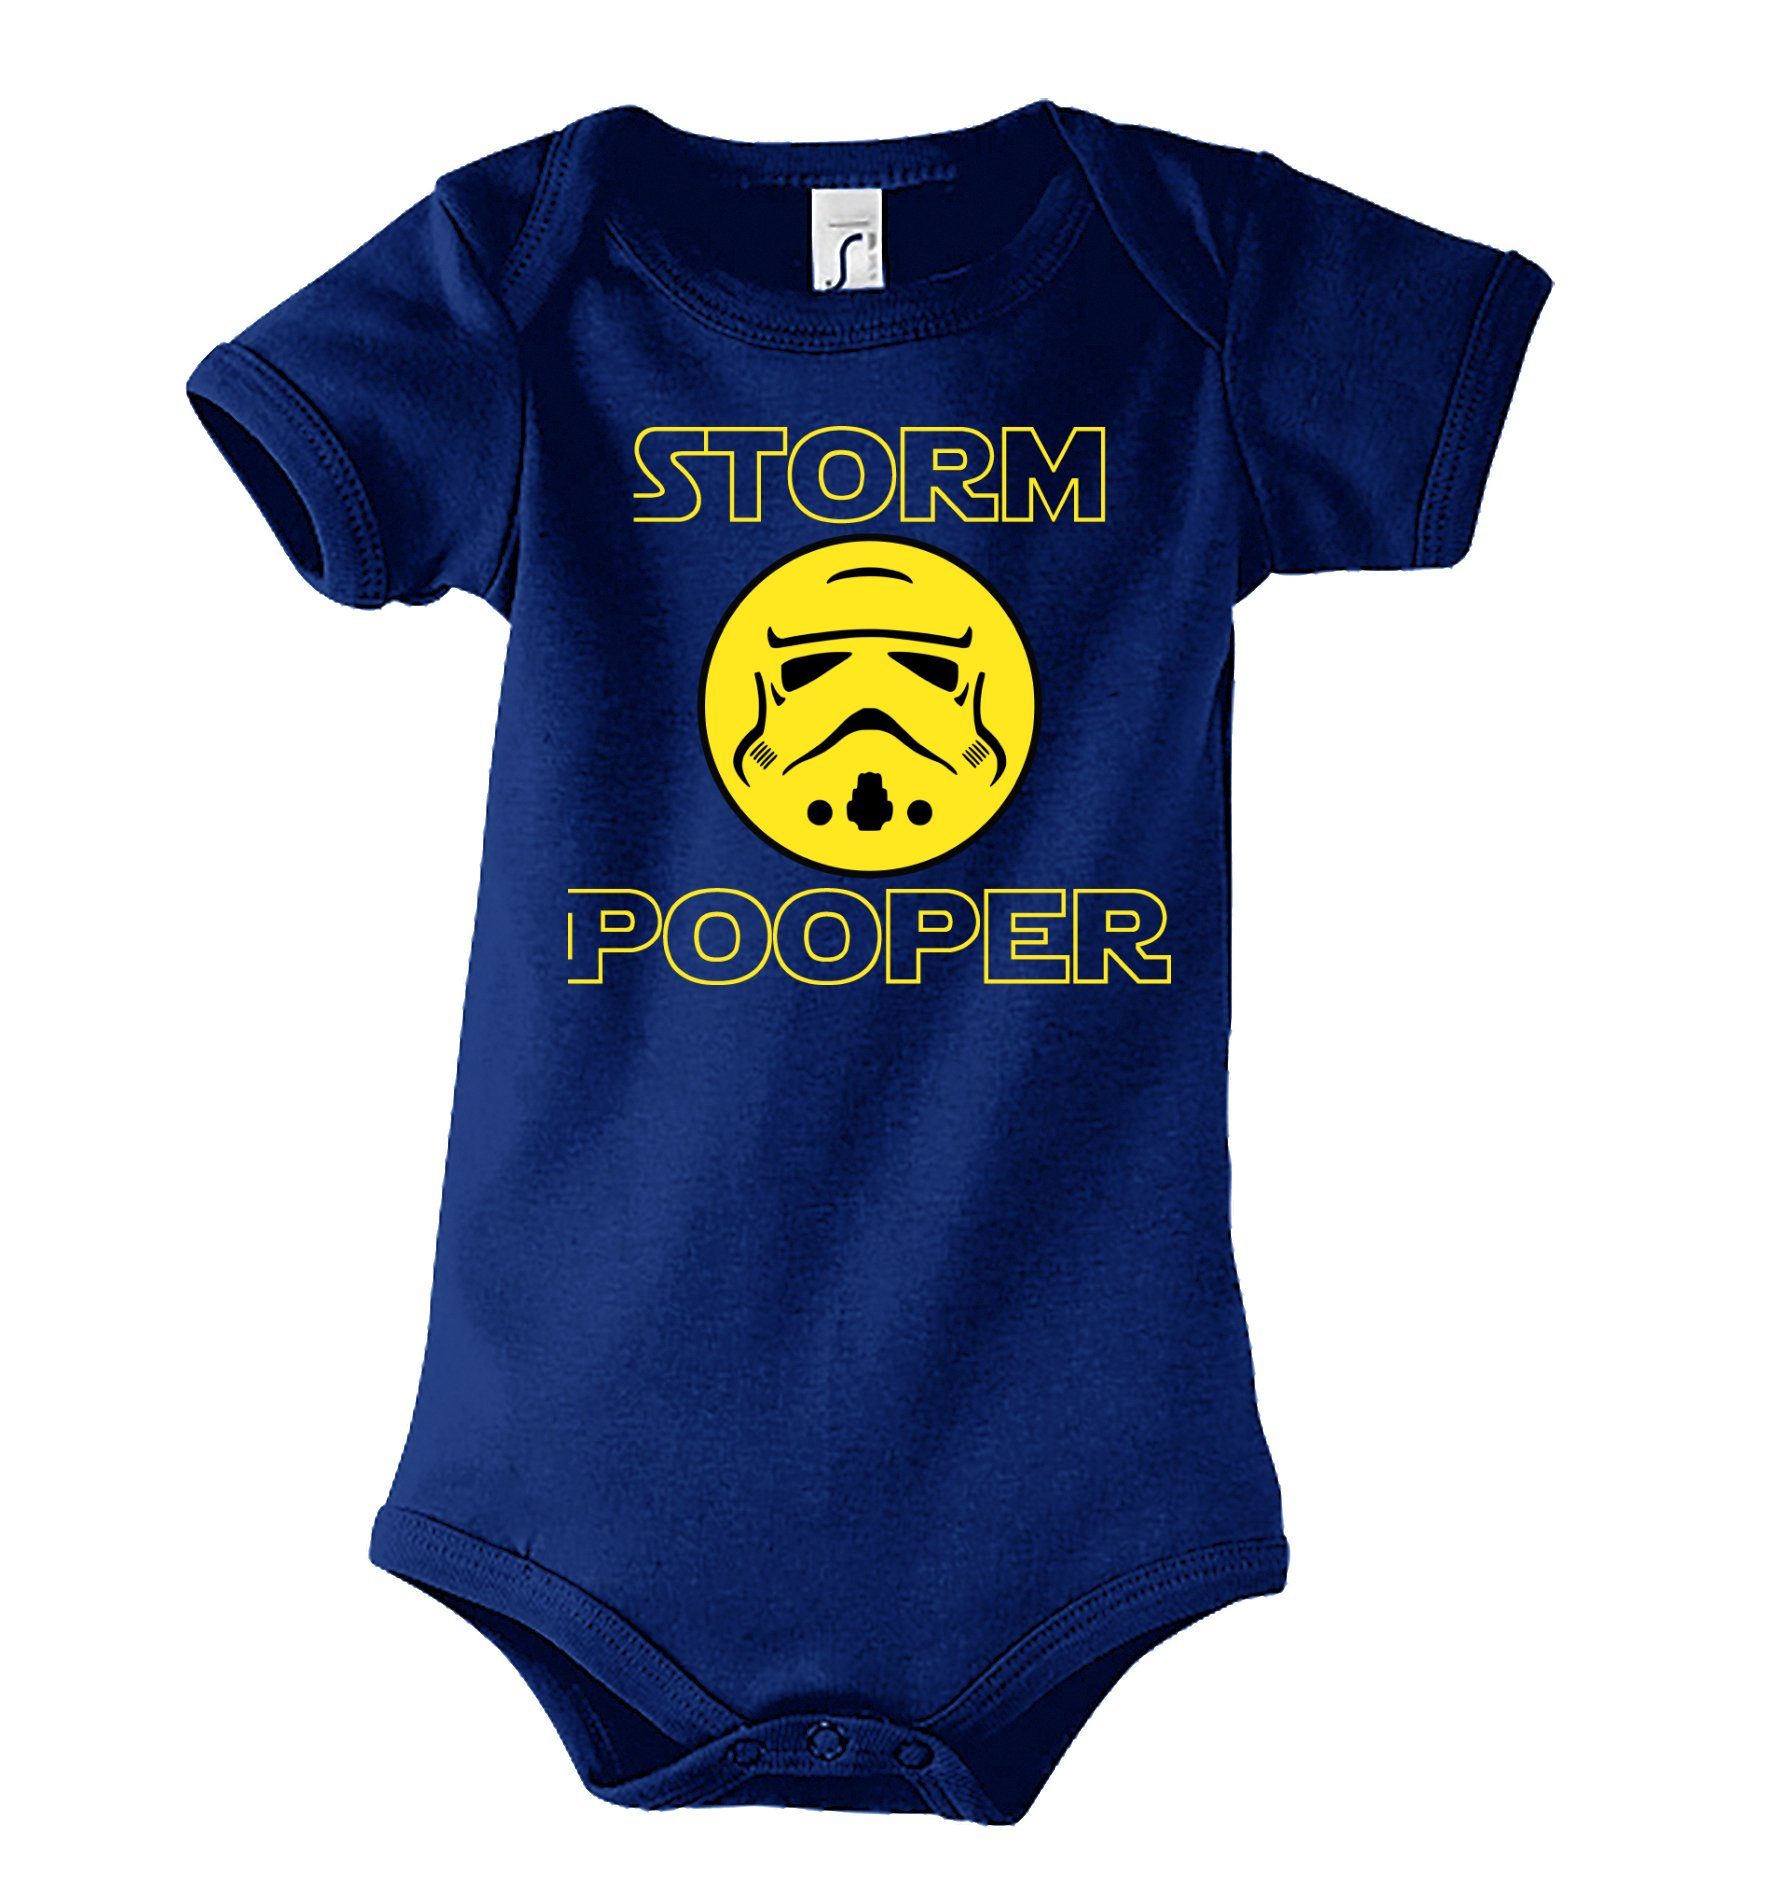 Youth Designz Kurzarmbody Storm Pooper Trooper Baby Body Kurzarm Strampler mit lustigem Spruch & Logo Print Navyblau